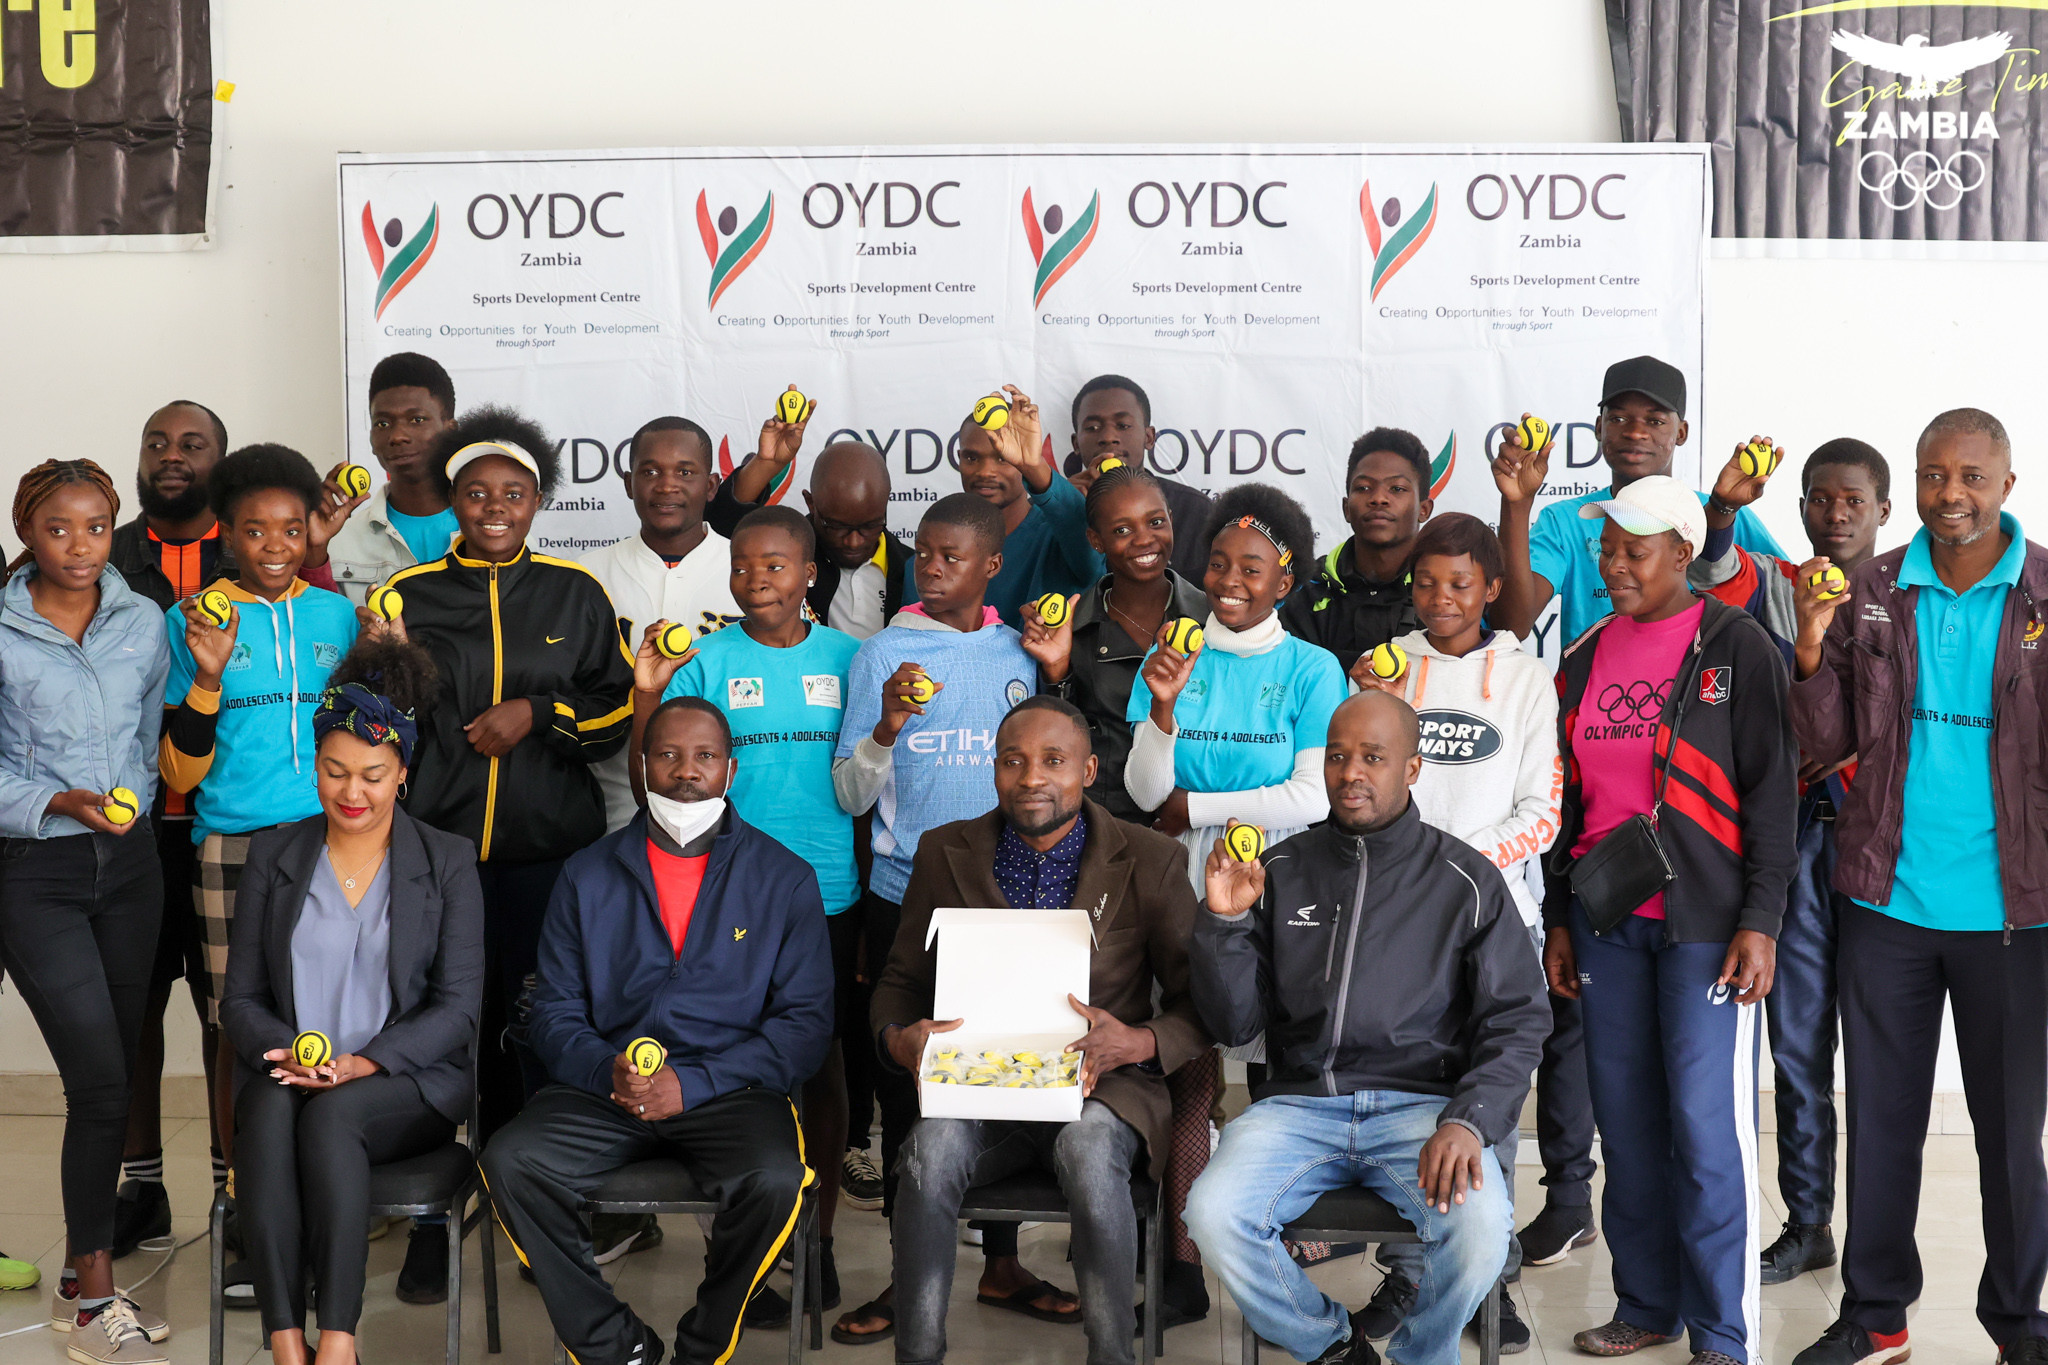 NOCZ helps introduce Baseball5 to OYDC Zambia